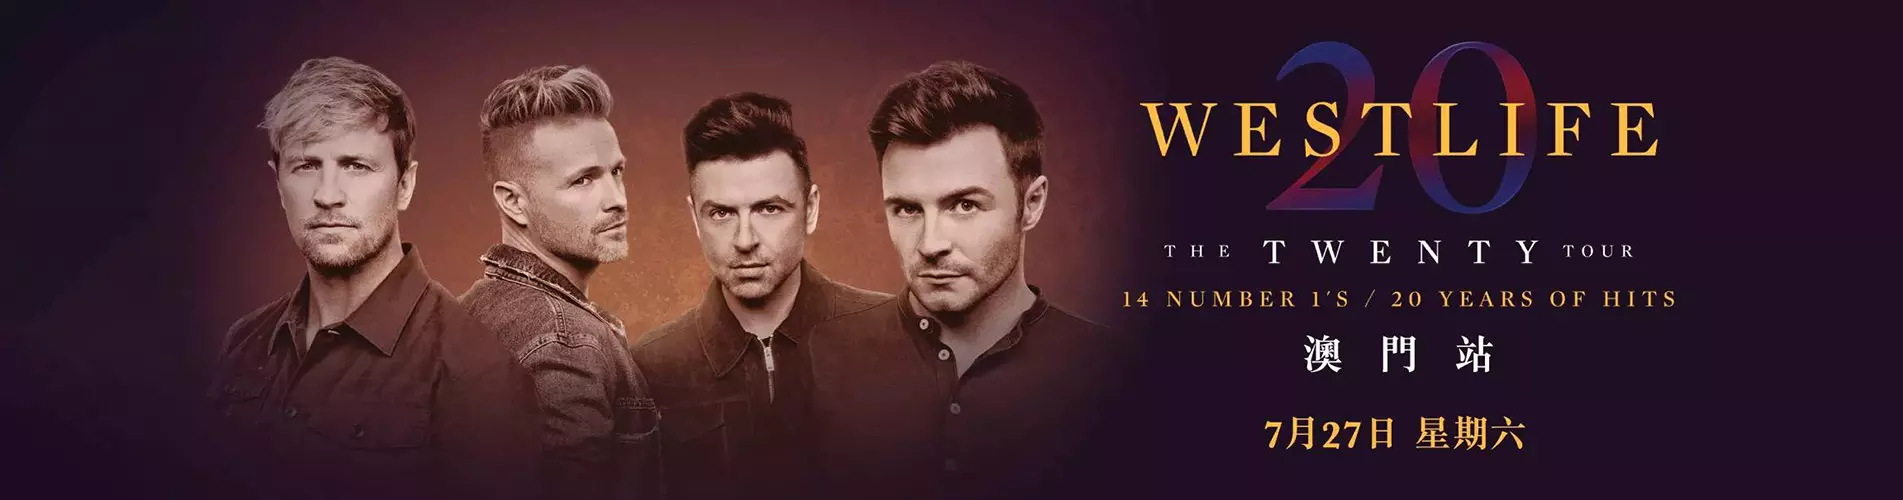 Westlife The Twenty Tour 演唱會2019 - 澳門站